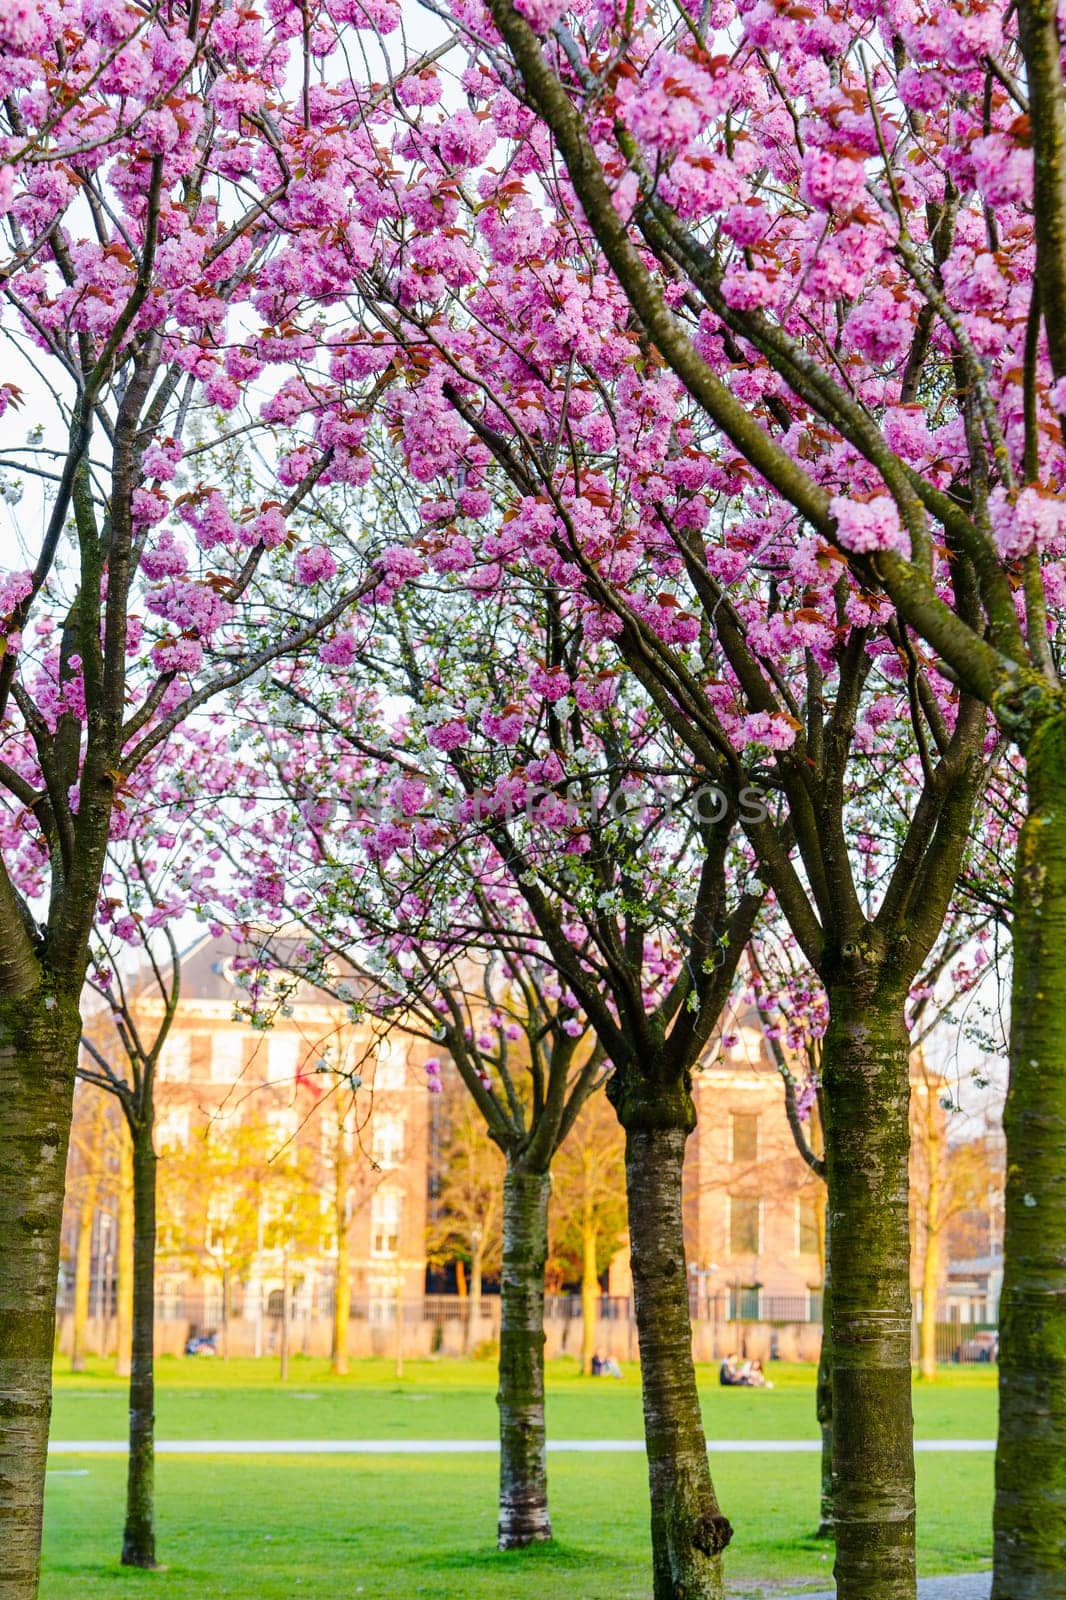 Blooming Sakura Tree in Spring - Beautiful Cherry Blossom Season Nature Photography by PhotoTime